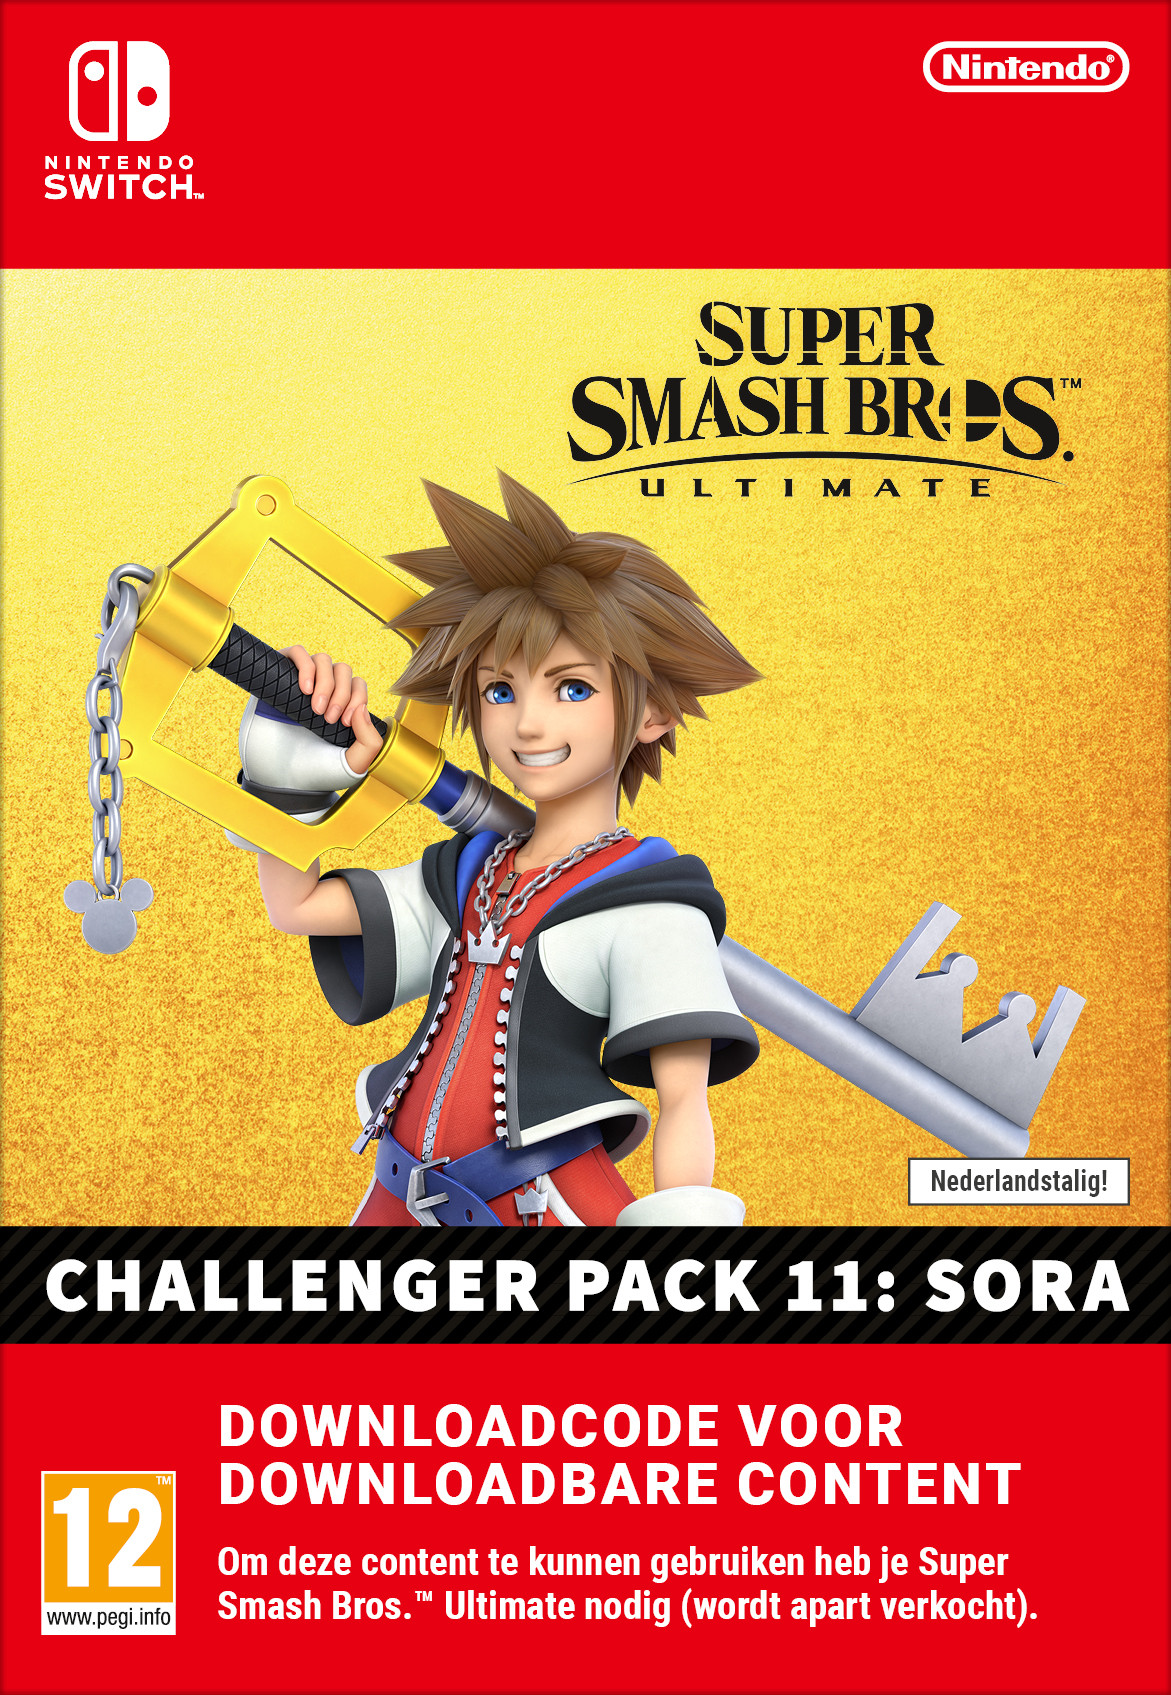 Nintendo AOC Super Smash Bros. Ultimate Challenger Pack 11: Sora DLC (extra content)